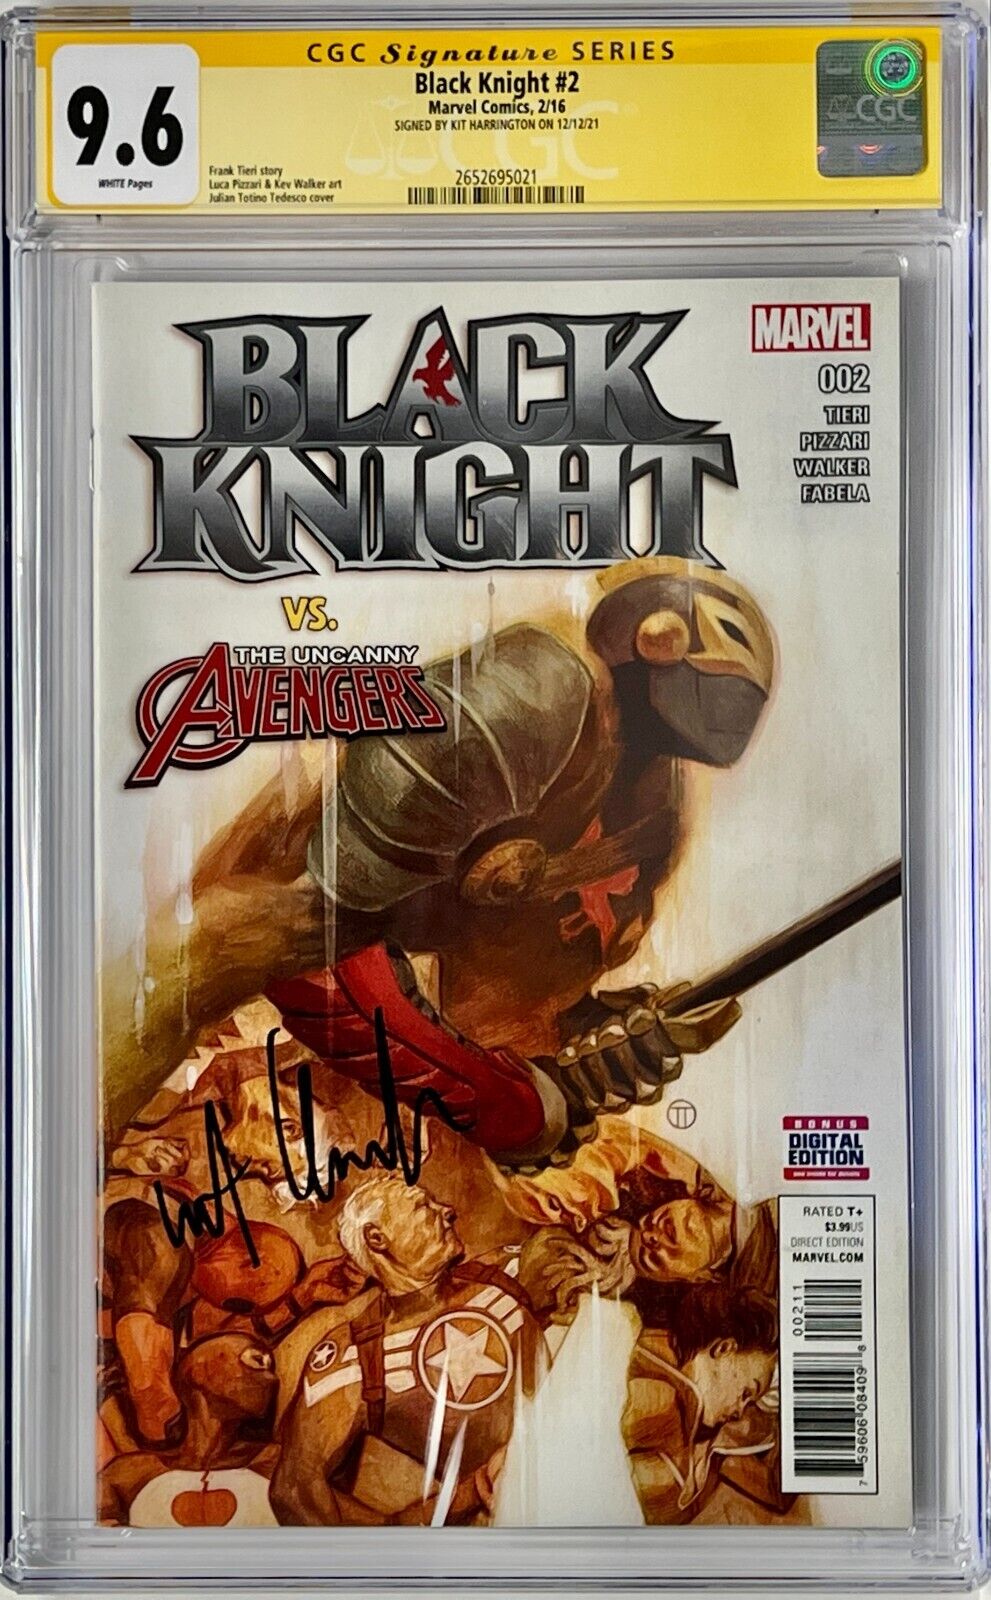 CGC Signature Series Graded 9.6 Marvel Black Knight #2 Signed by Kit Harington